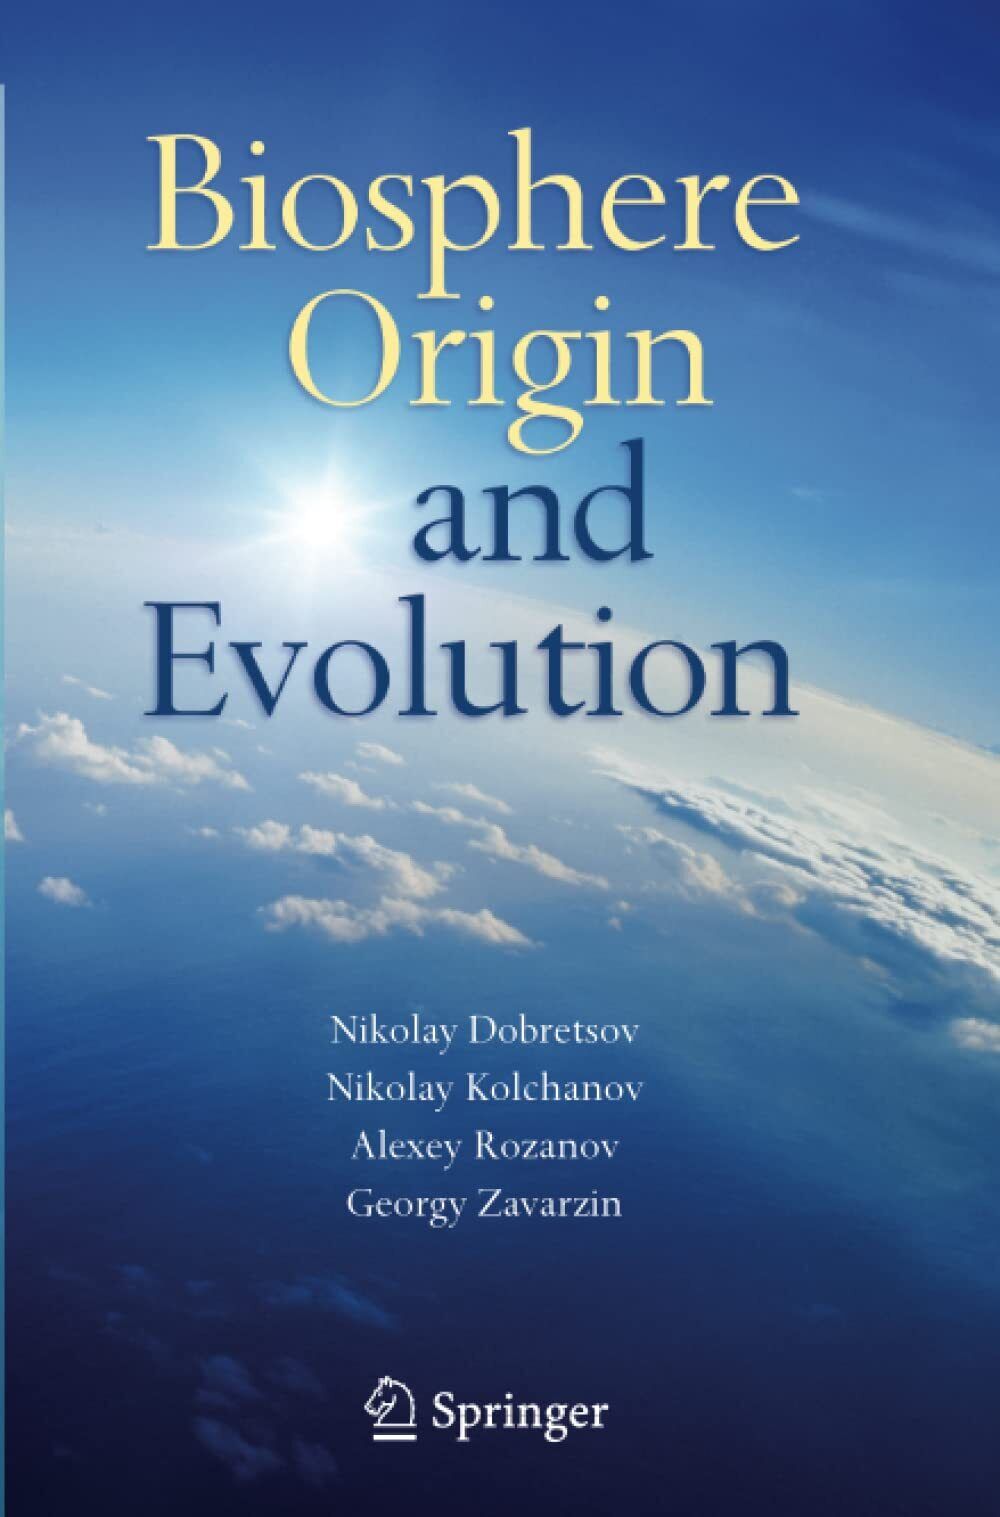 Biosphere Origin and Evolution - Nikolay Dobretsov - Springer, 2010